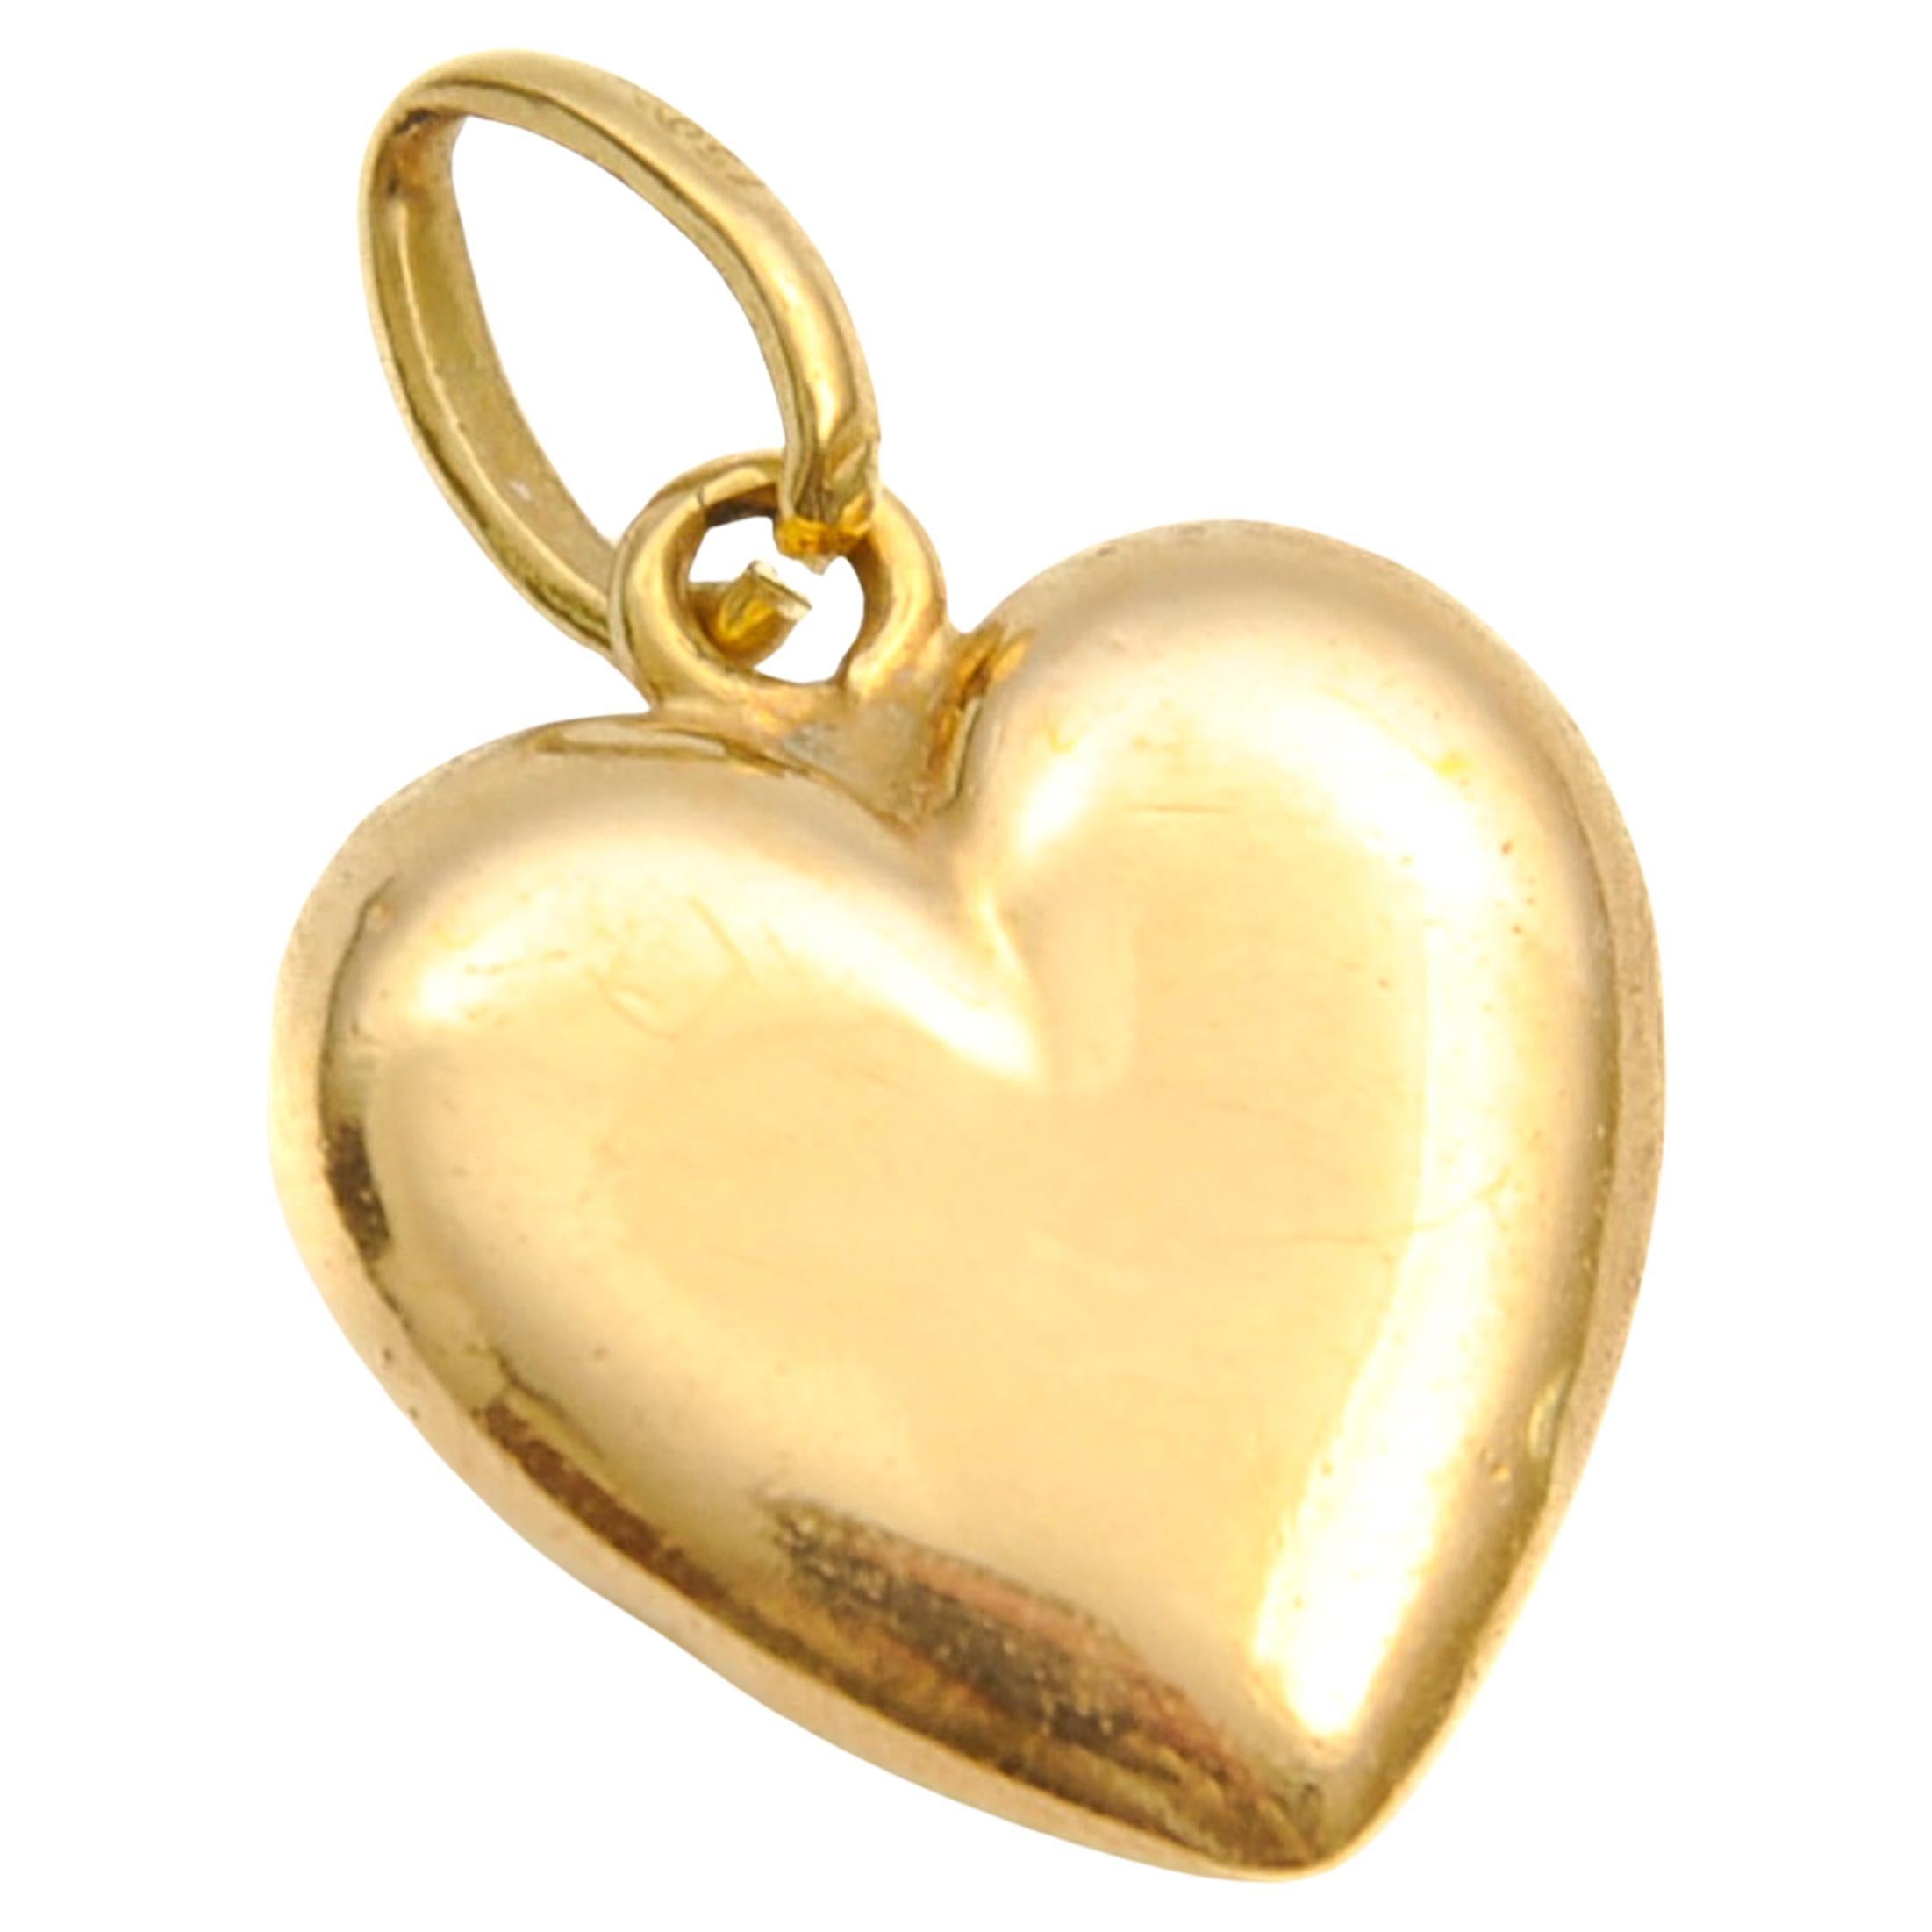 Vintage 18 Karat Yellow Gold Heart Charm Pendant